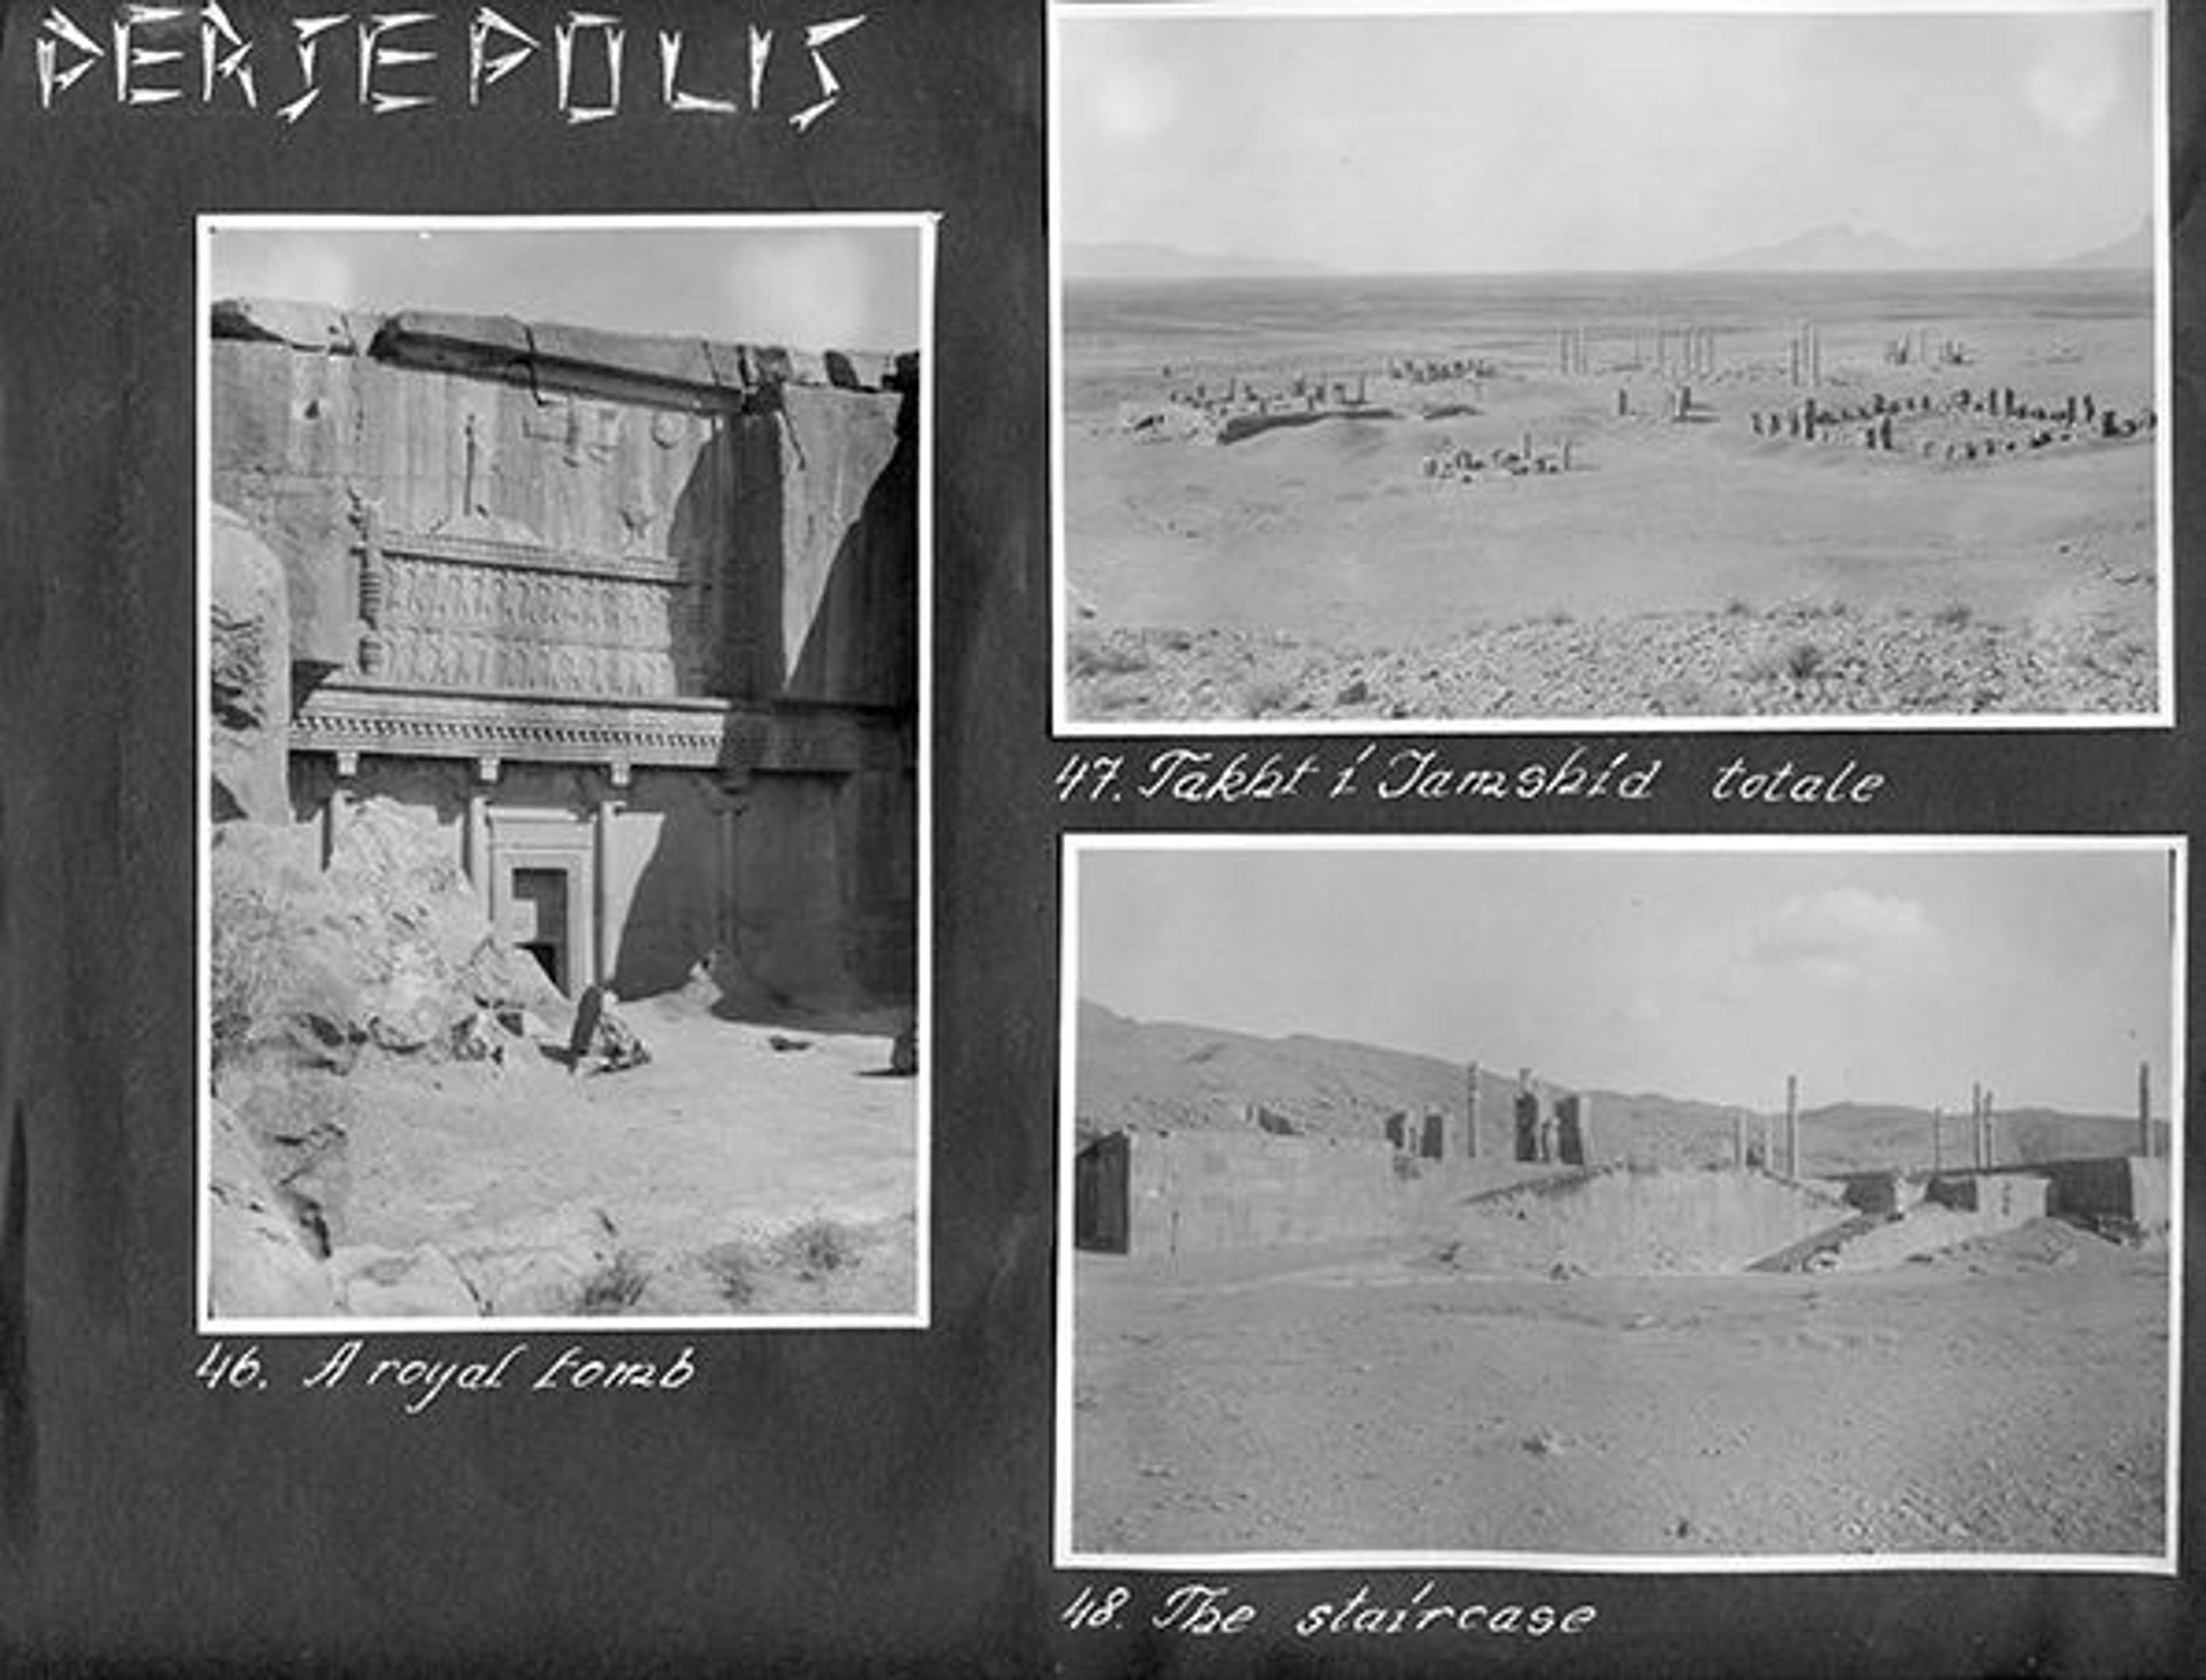 Photograph album showing scenes from Persepolis